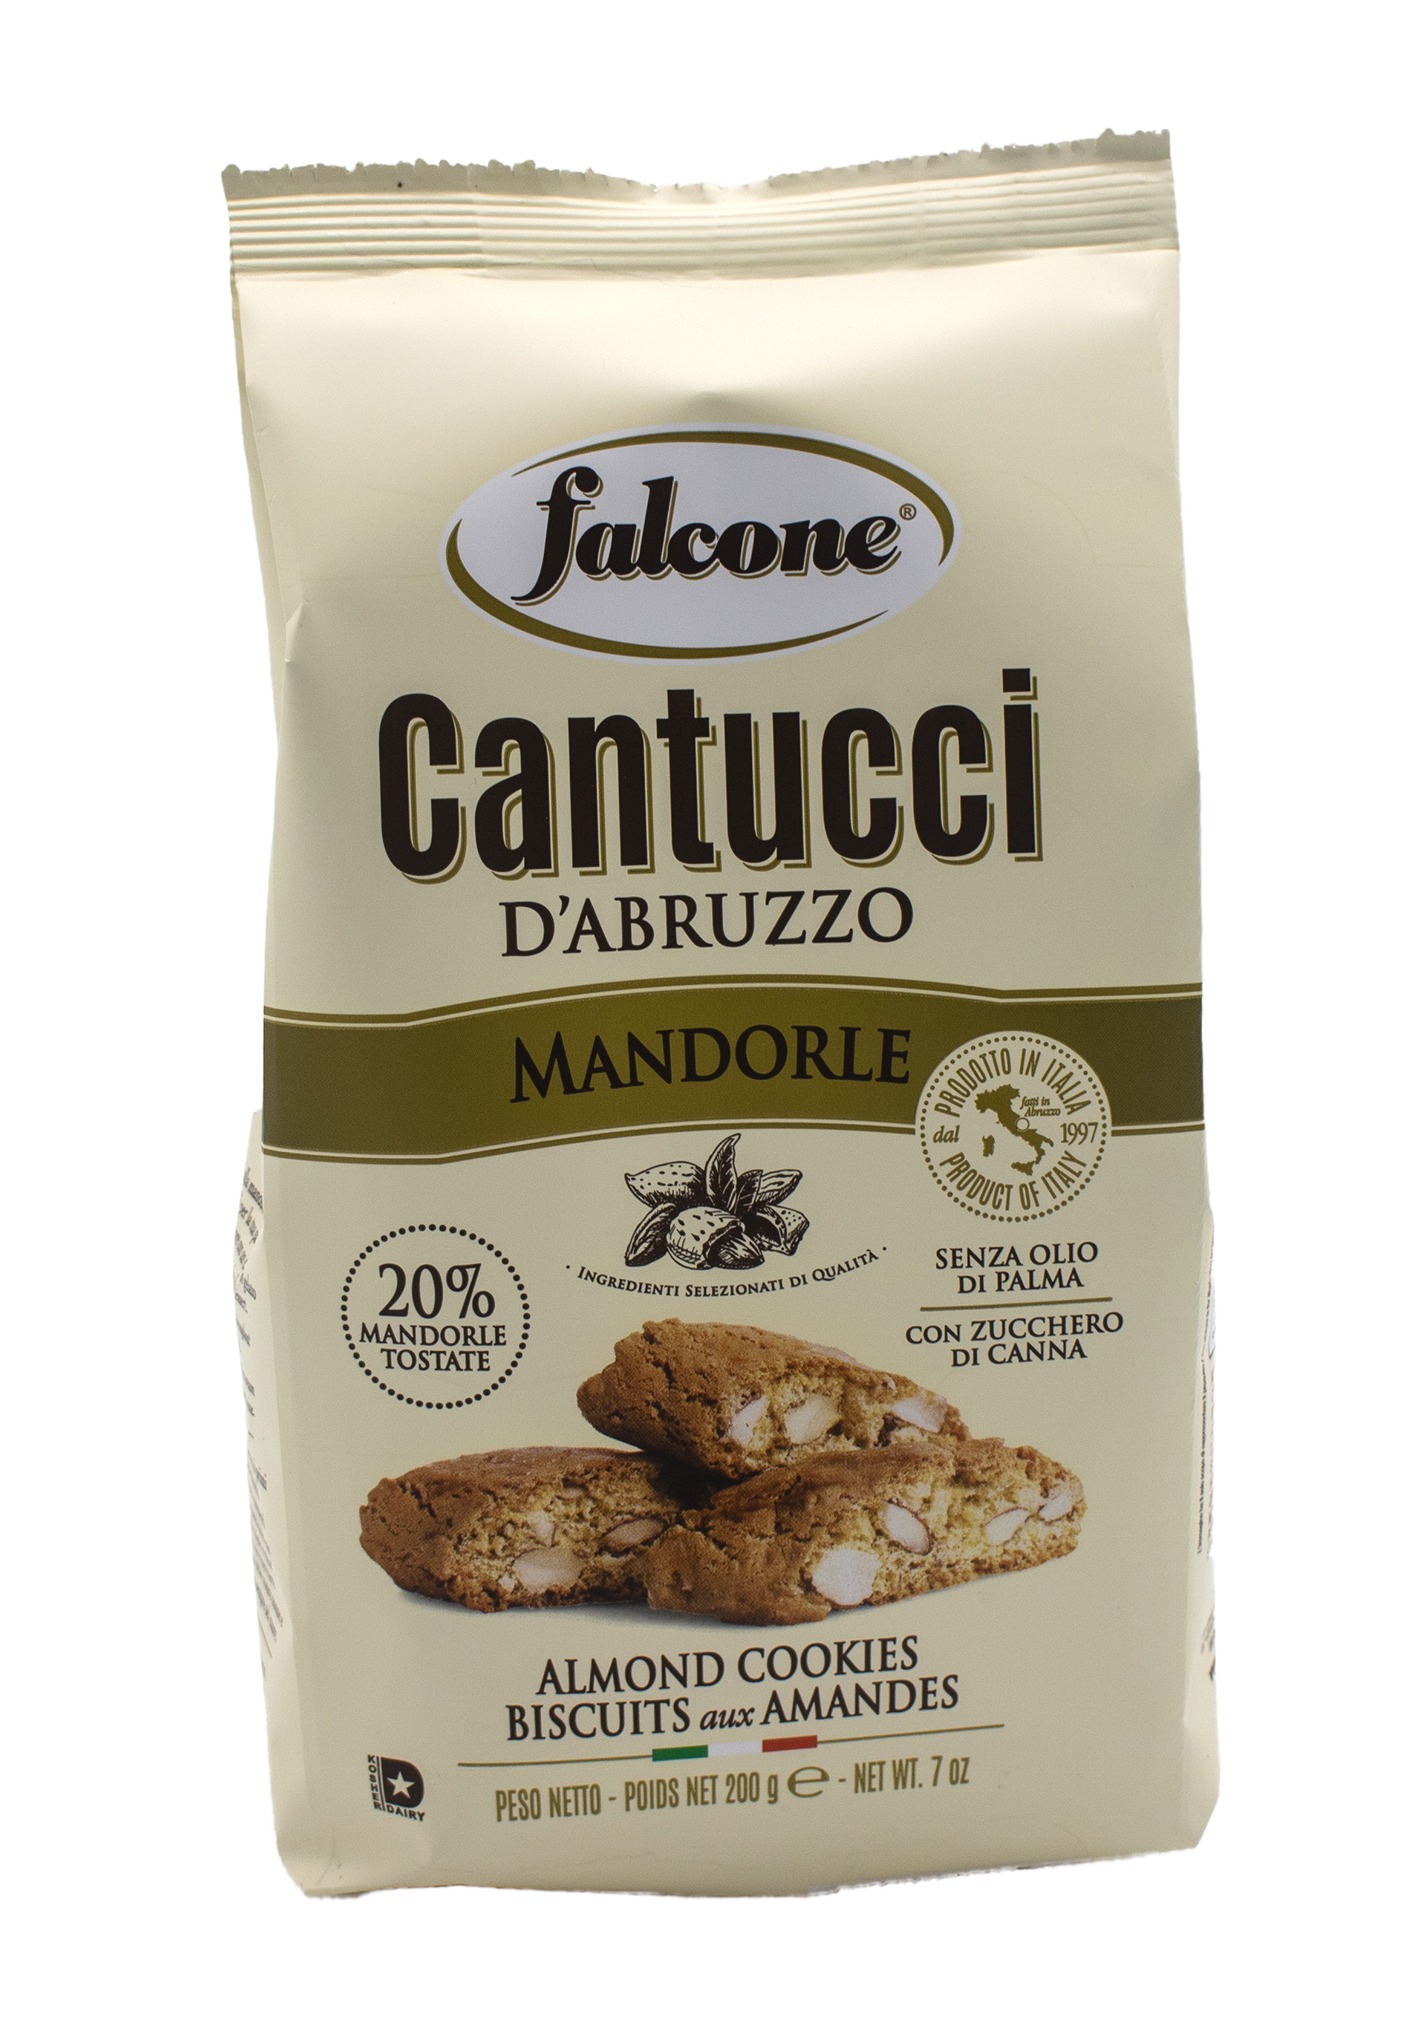 Cantucci D´Abruzzo MANDLOVÉ 200gr, Falcone, Itálie, sáček pekařský výrobek